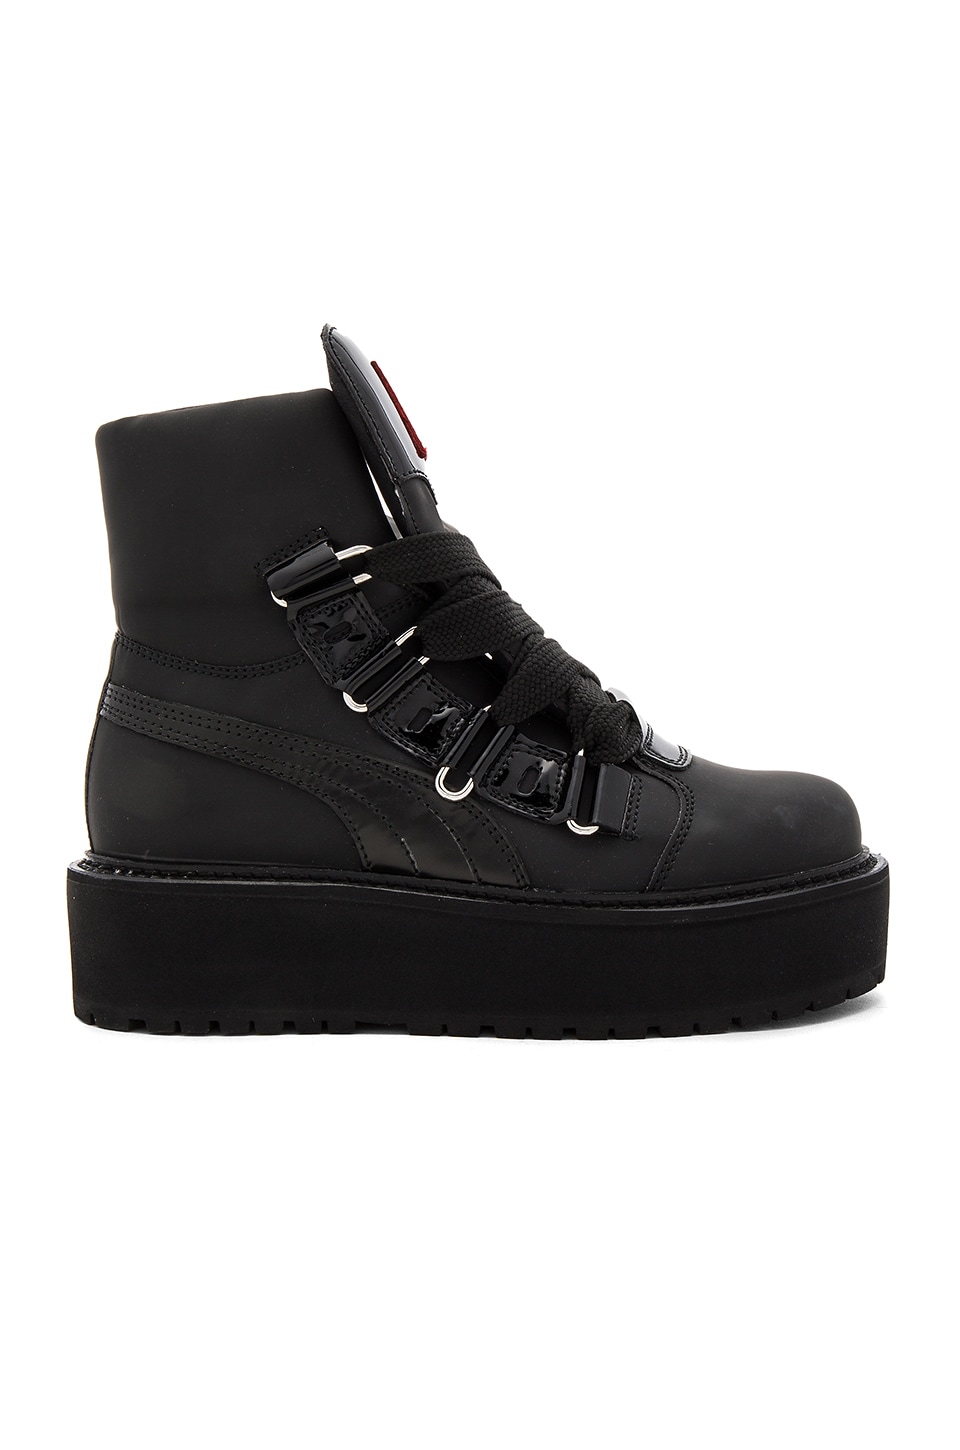 puma boots black